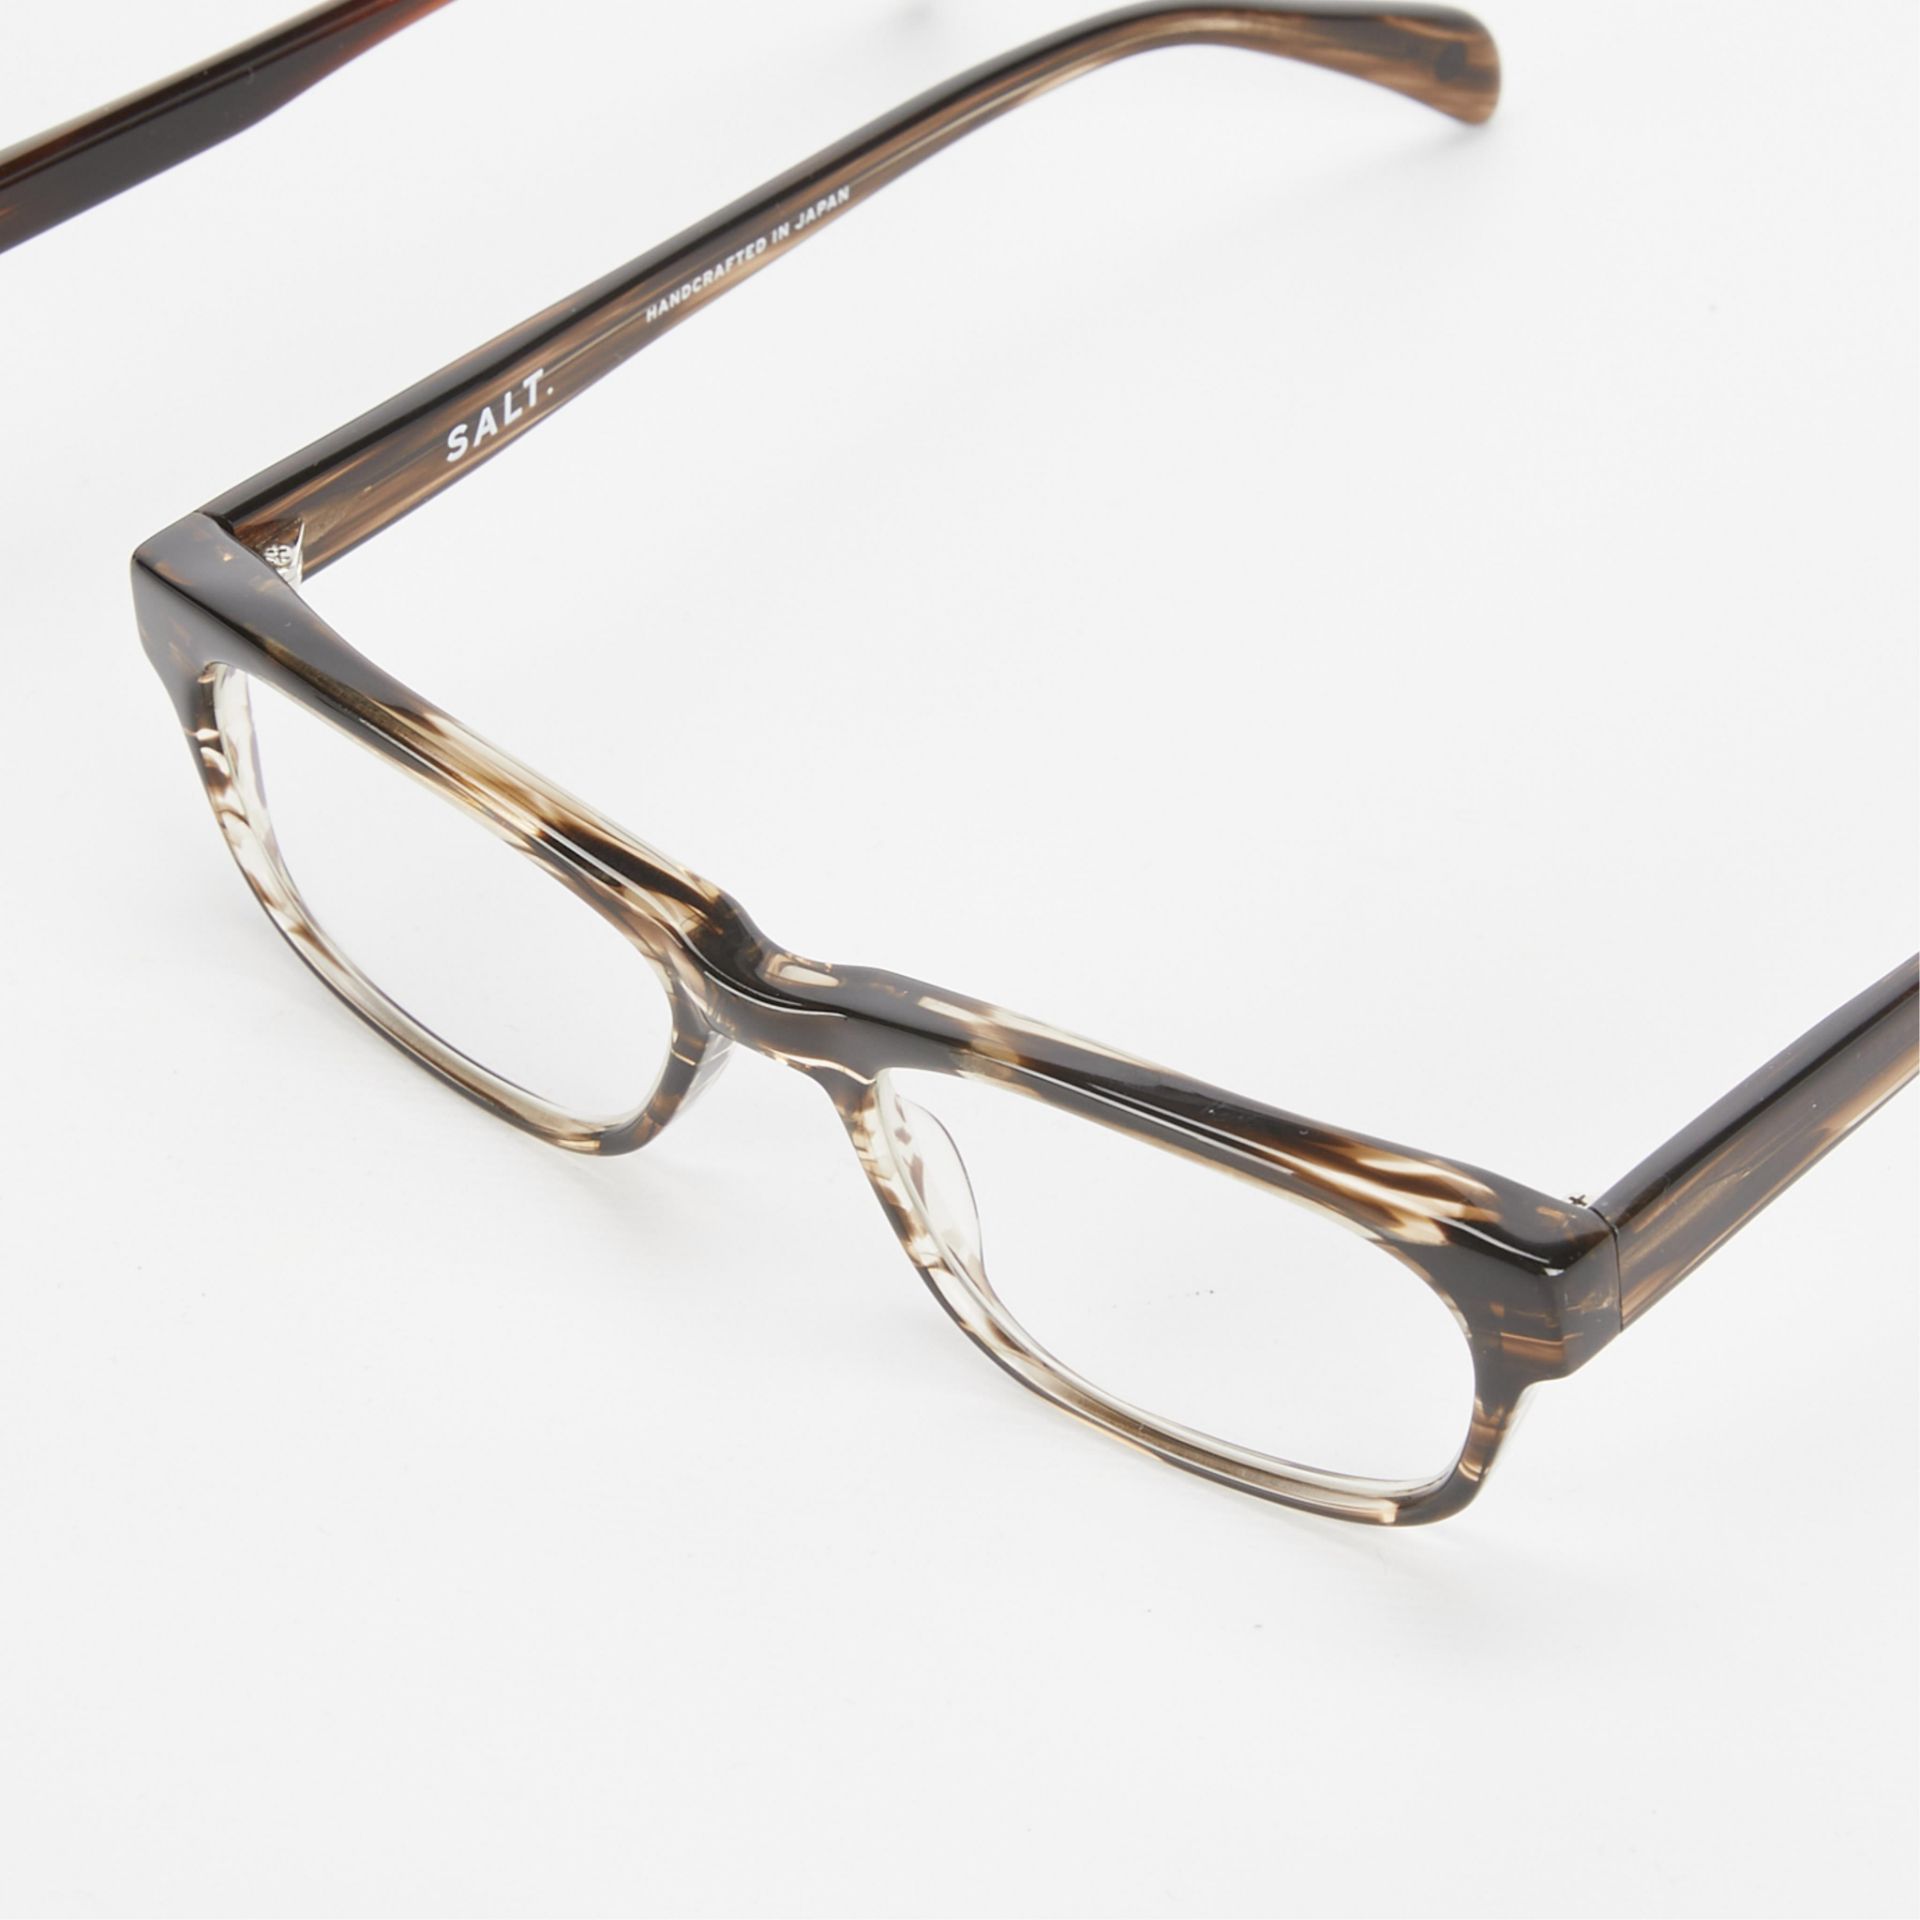 Grp of 8 SALT Eyeglasses - Image 2 of 11